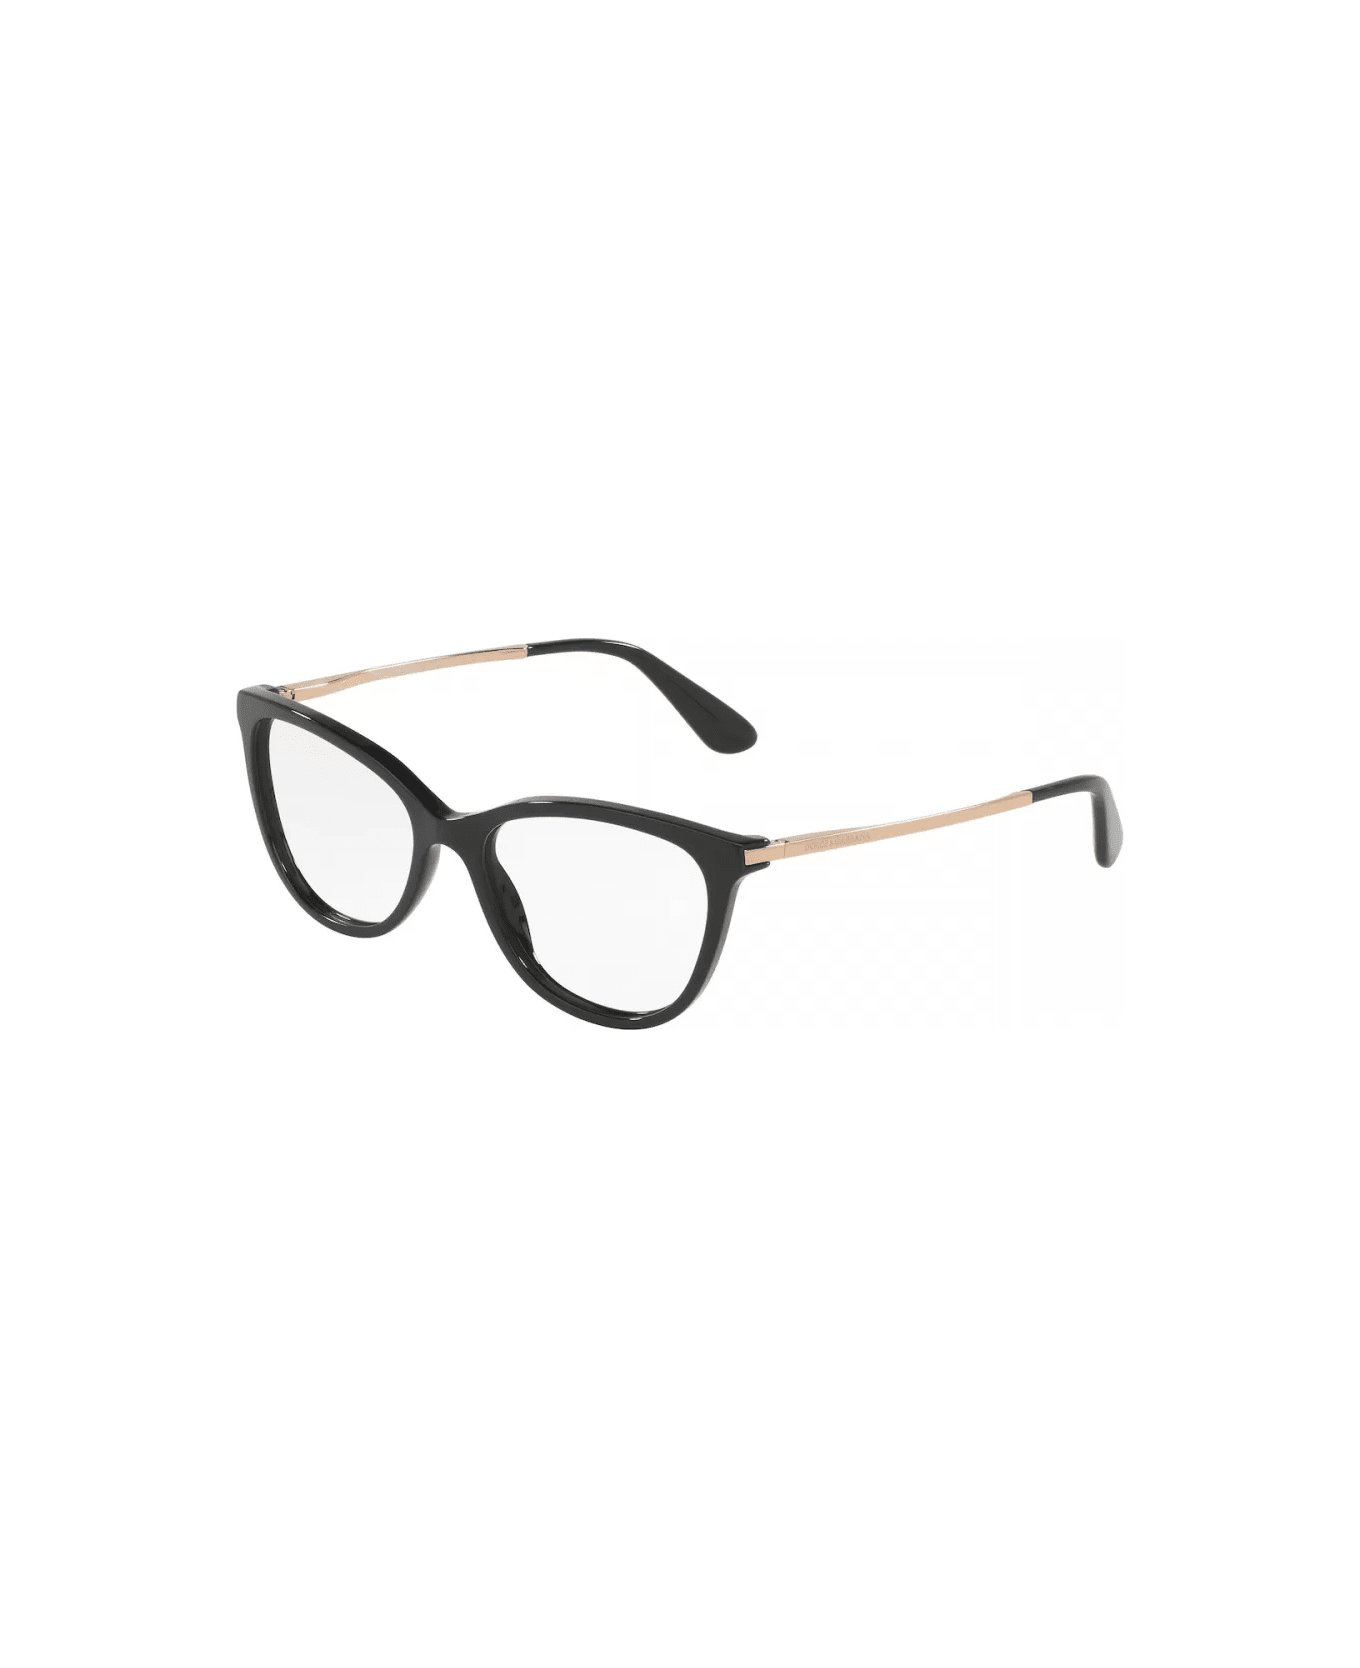 Dolce & Gabbana Eyewear DG3258 501 Glasses